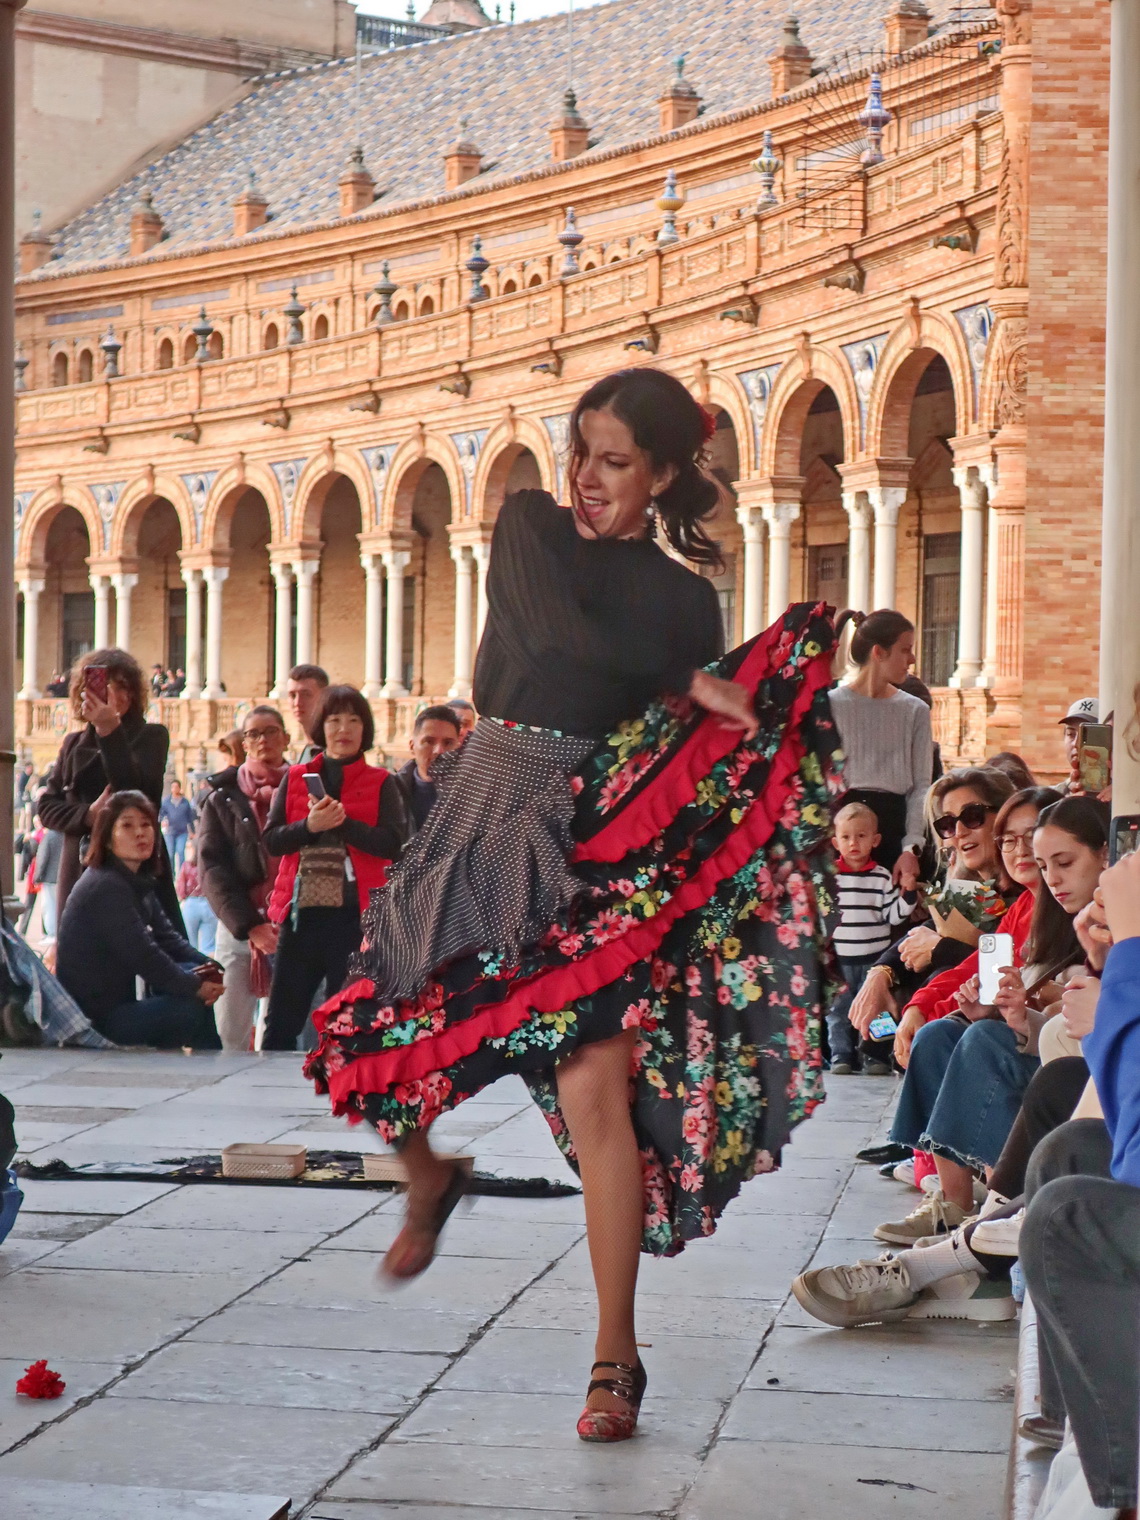 Performance of Flamenco on the huge Plaza de España - free of charge